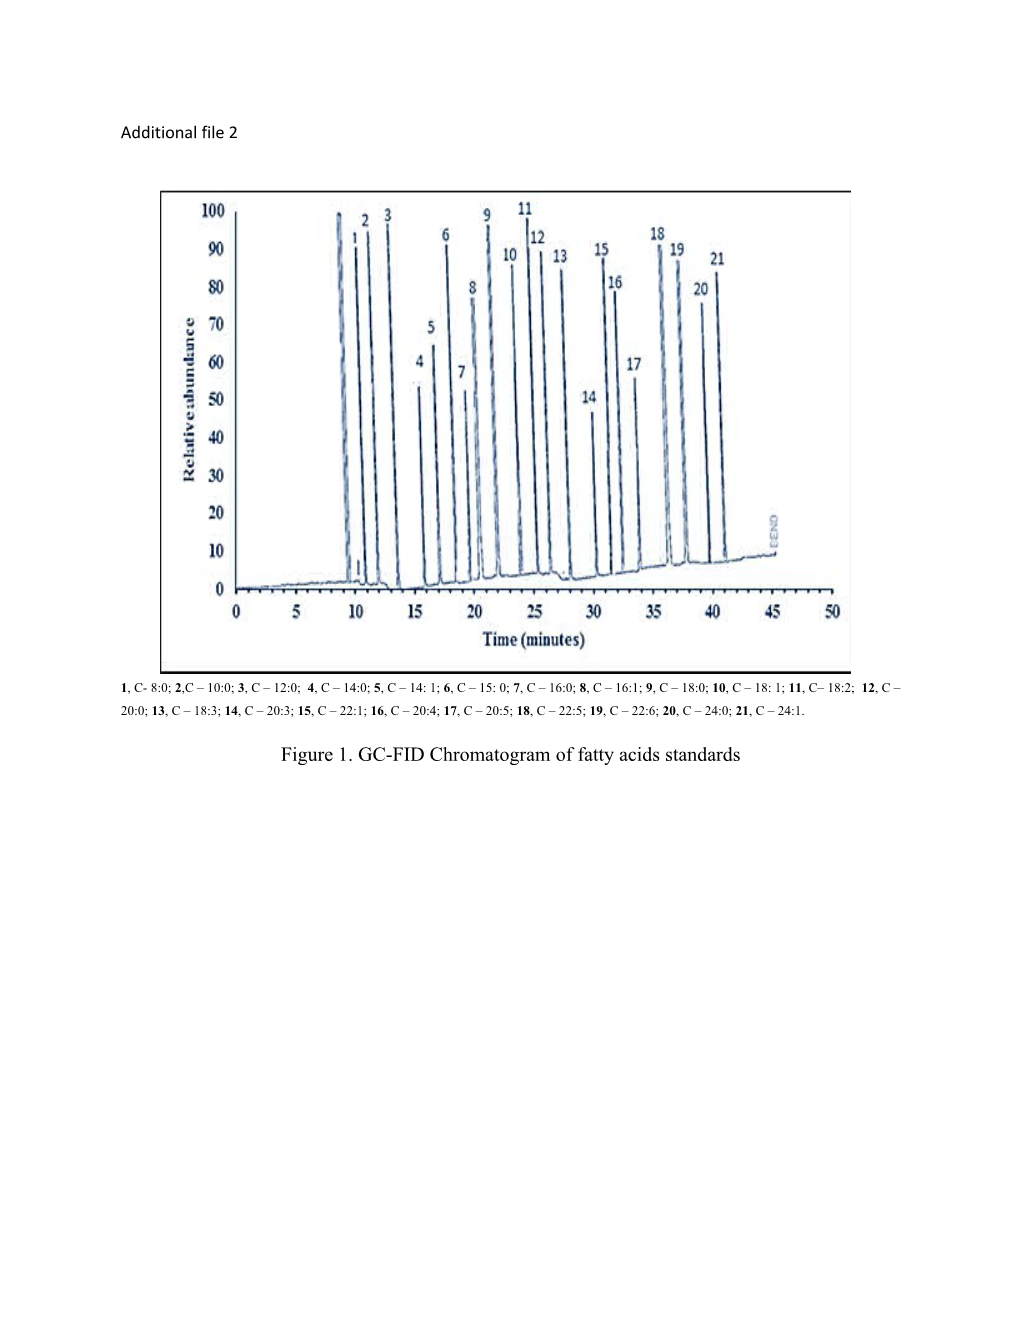 Figure 1. GC-FID Chromatogram of Fatty Acids Standards